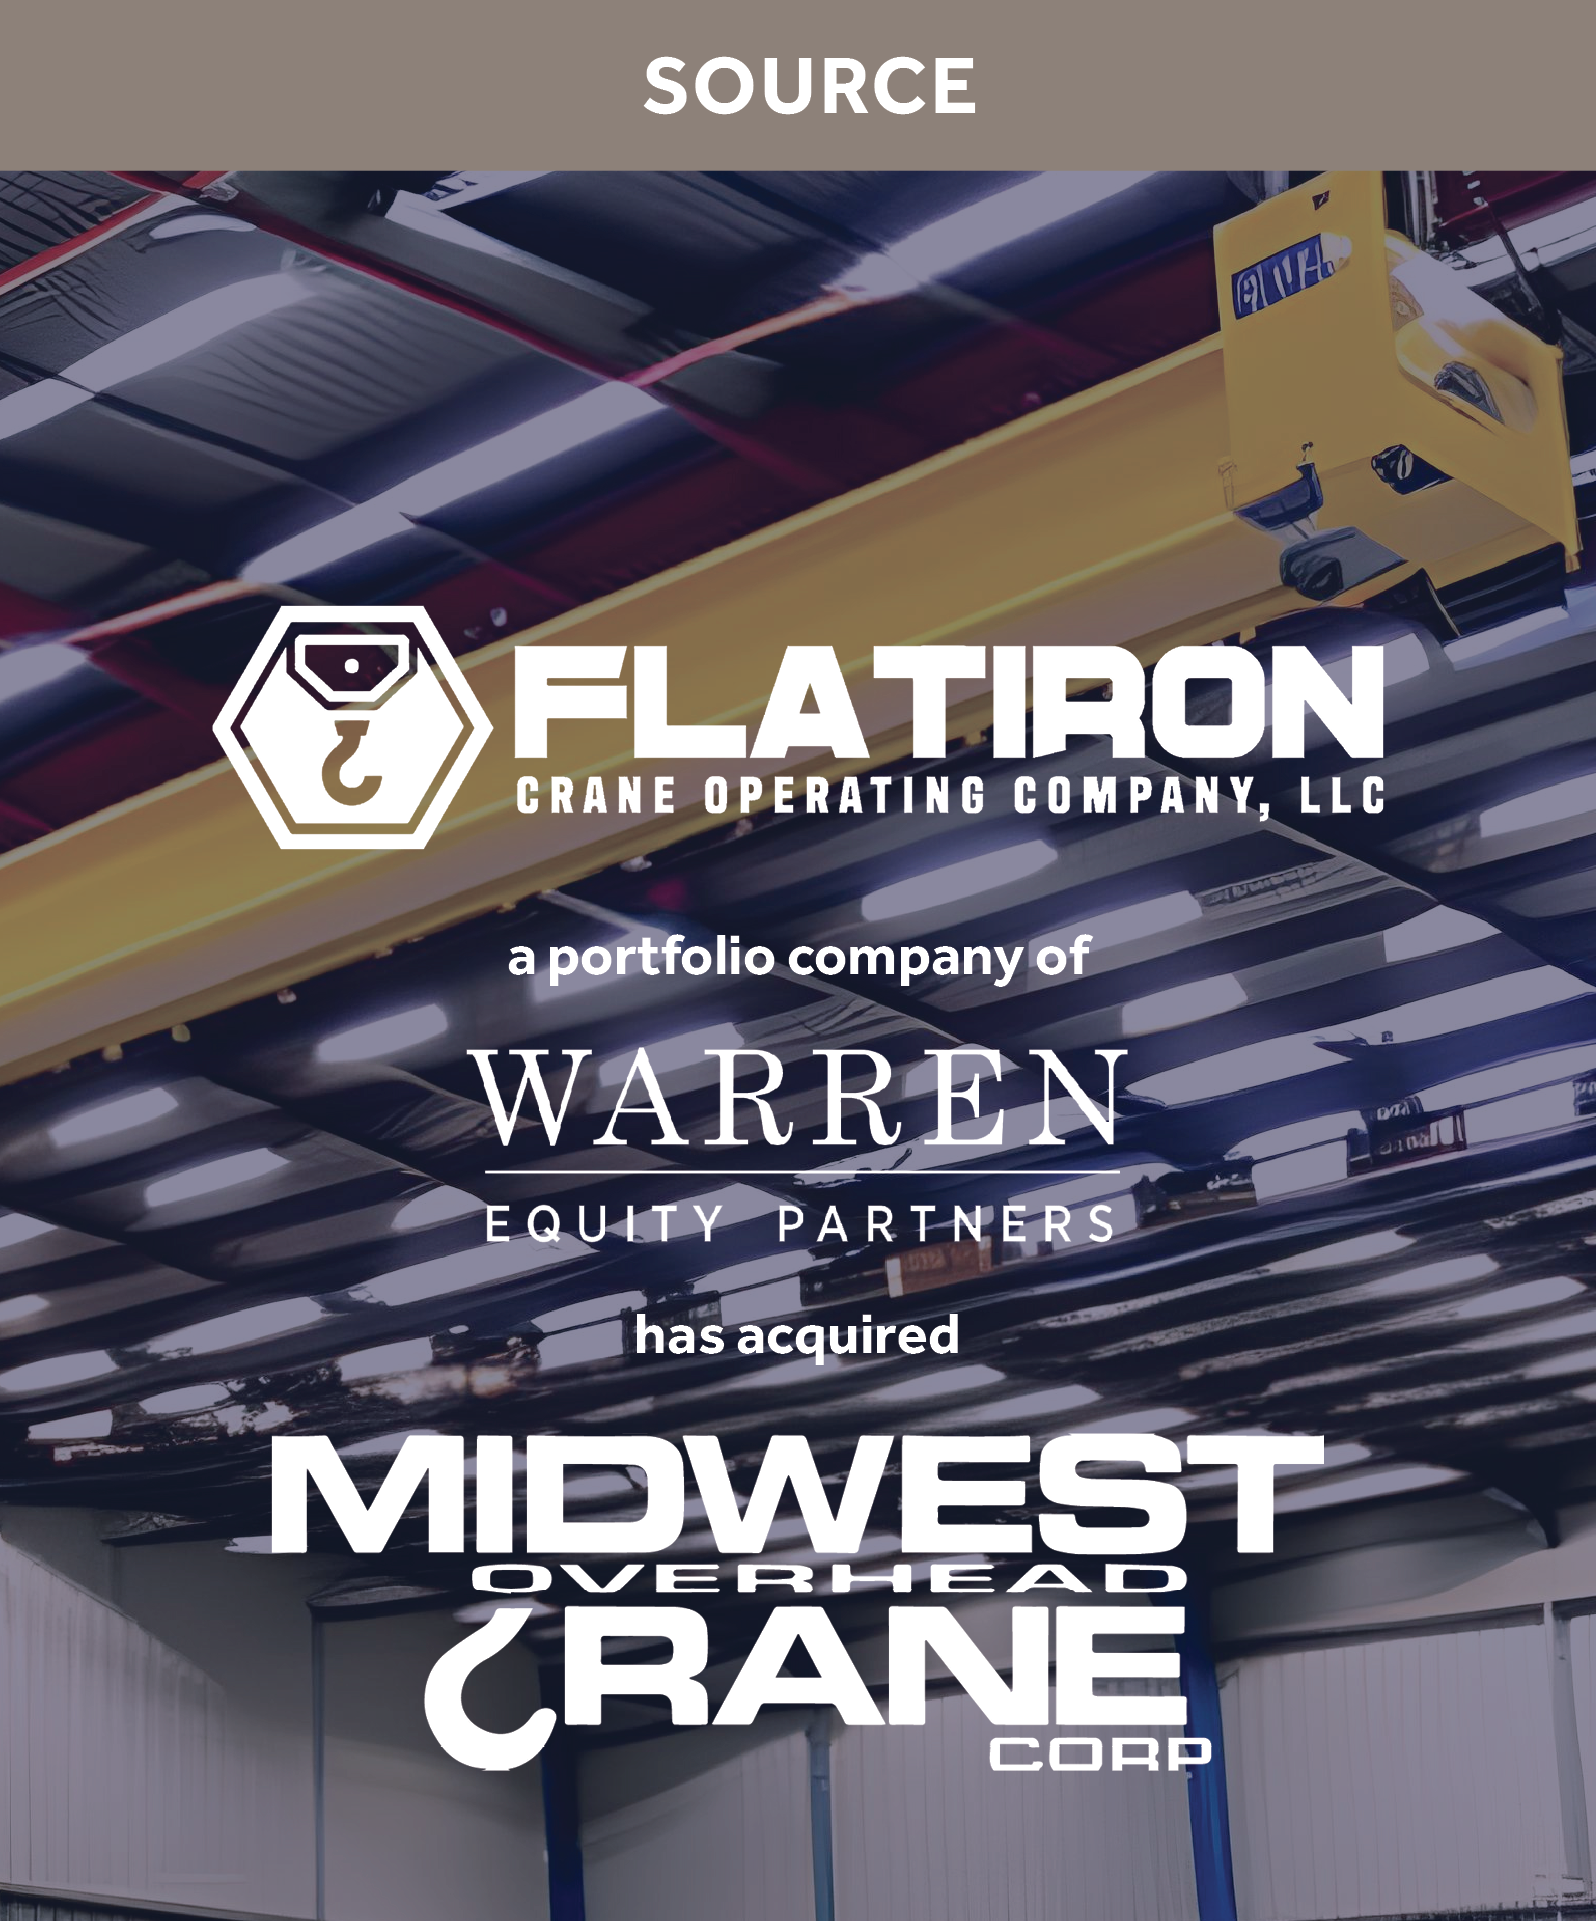 Overhead crane system with Flatiron Crane Company and Midwest Crane logos